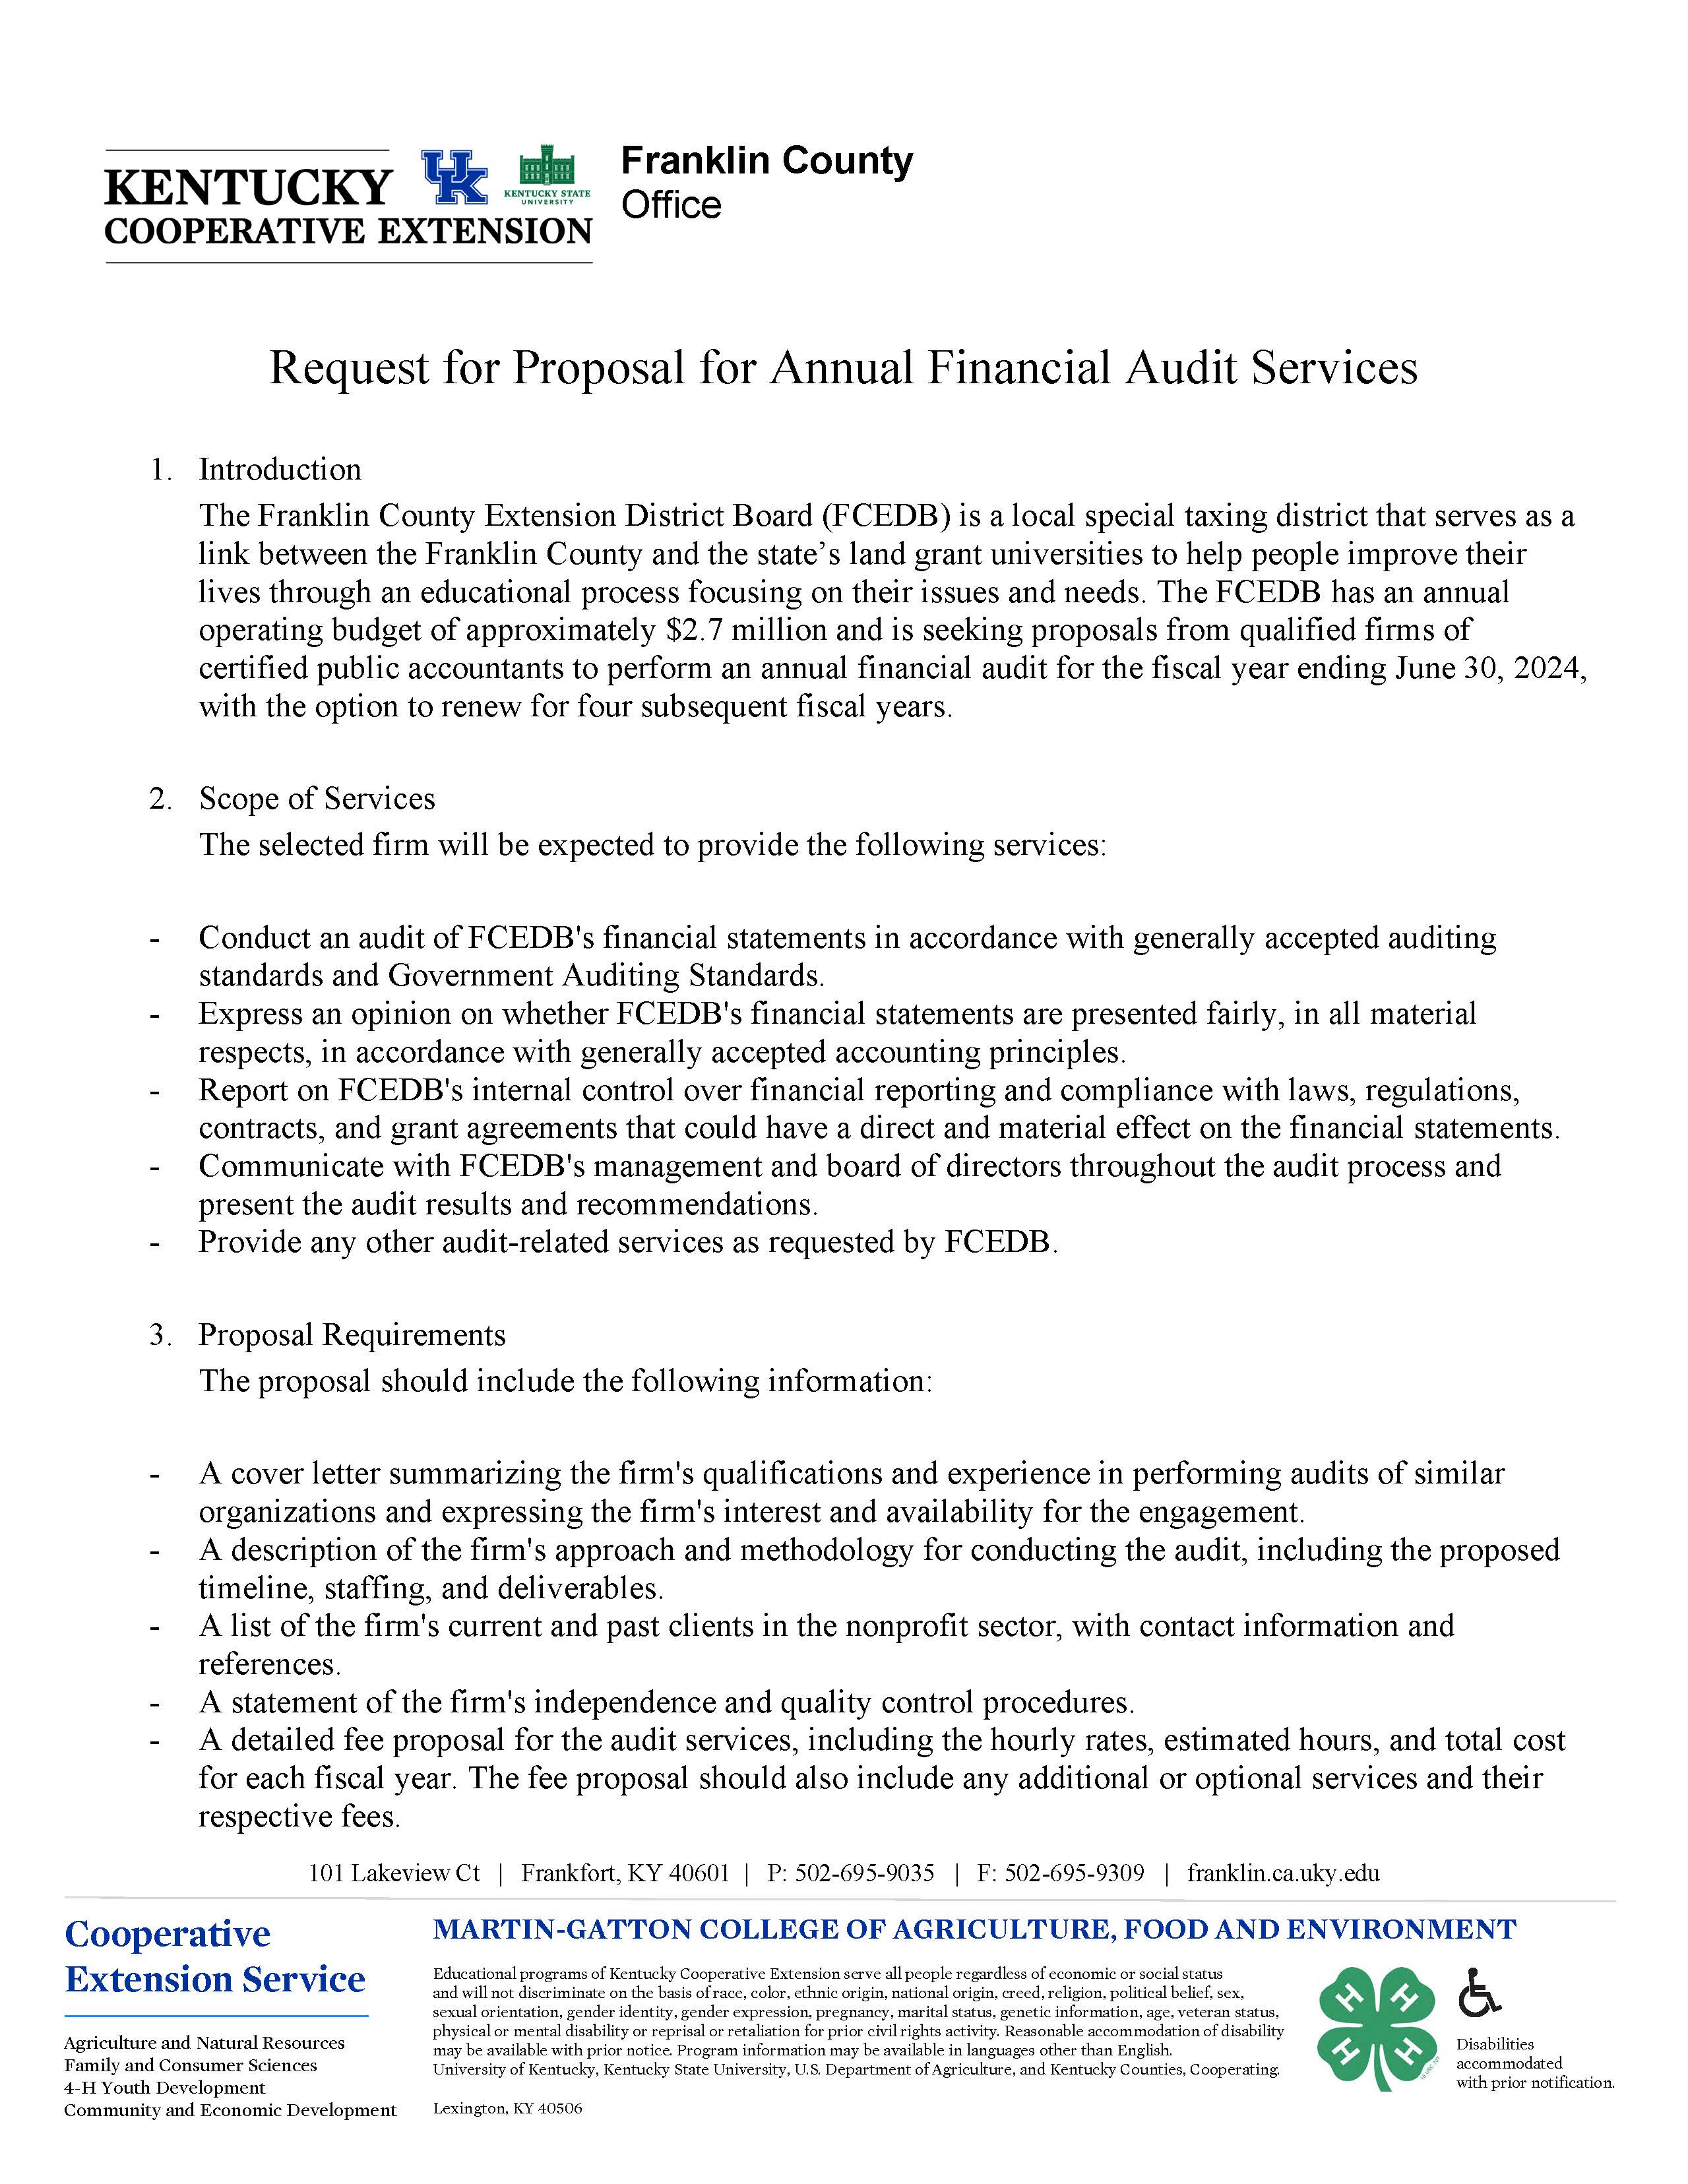 audit proposal image